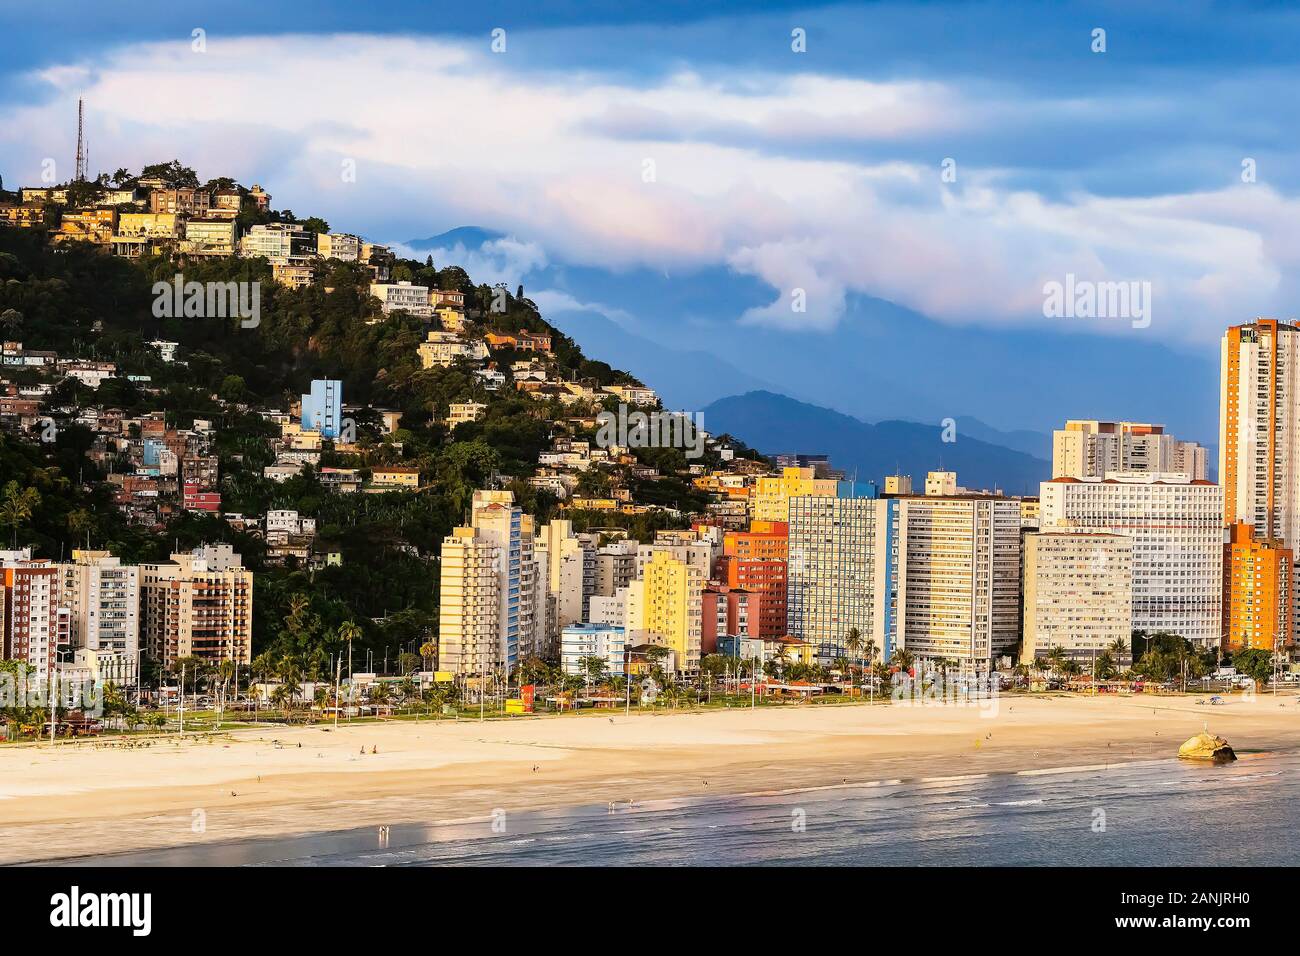 Aerial view of a Brazilian coastal city of the Paulista coast. View of the beachfront city, some hills, and the Praia do Itarare beach. Sao Vicente SP Stock Photo